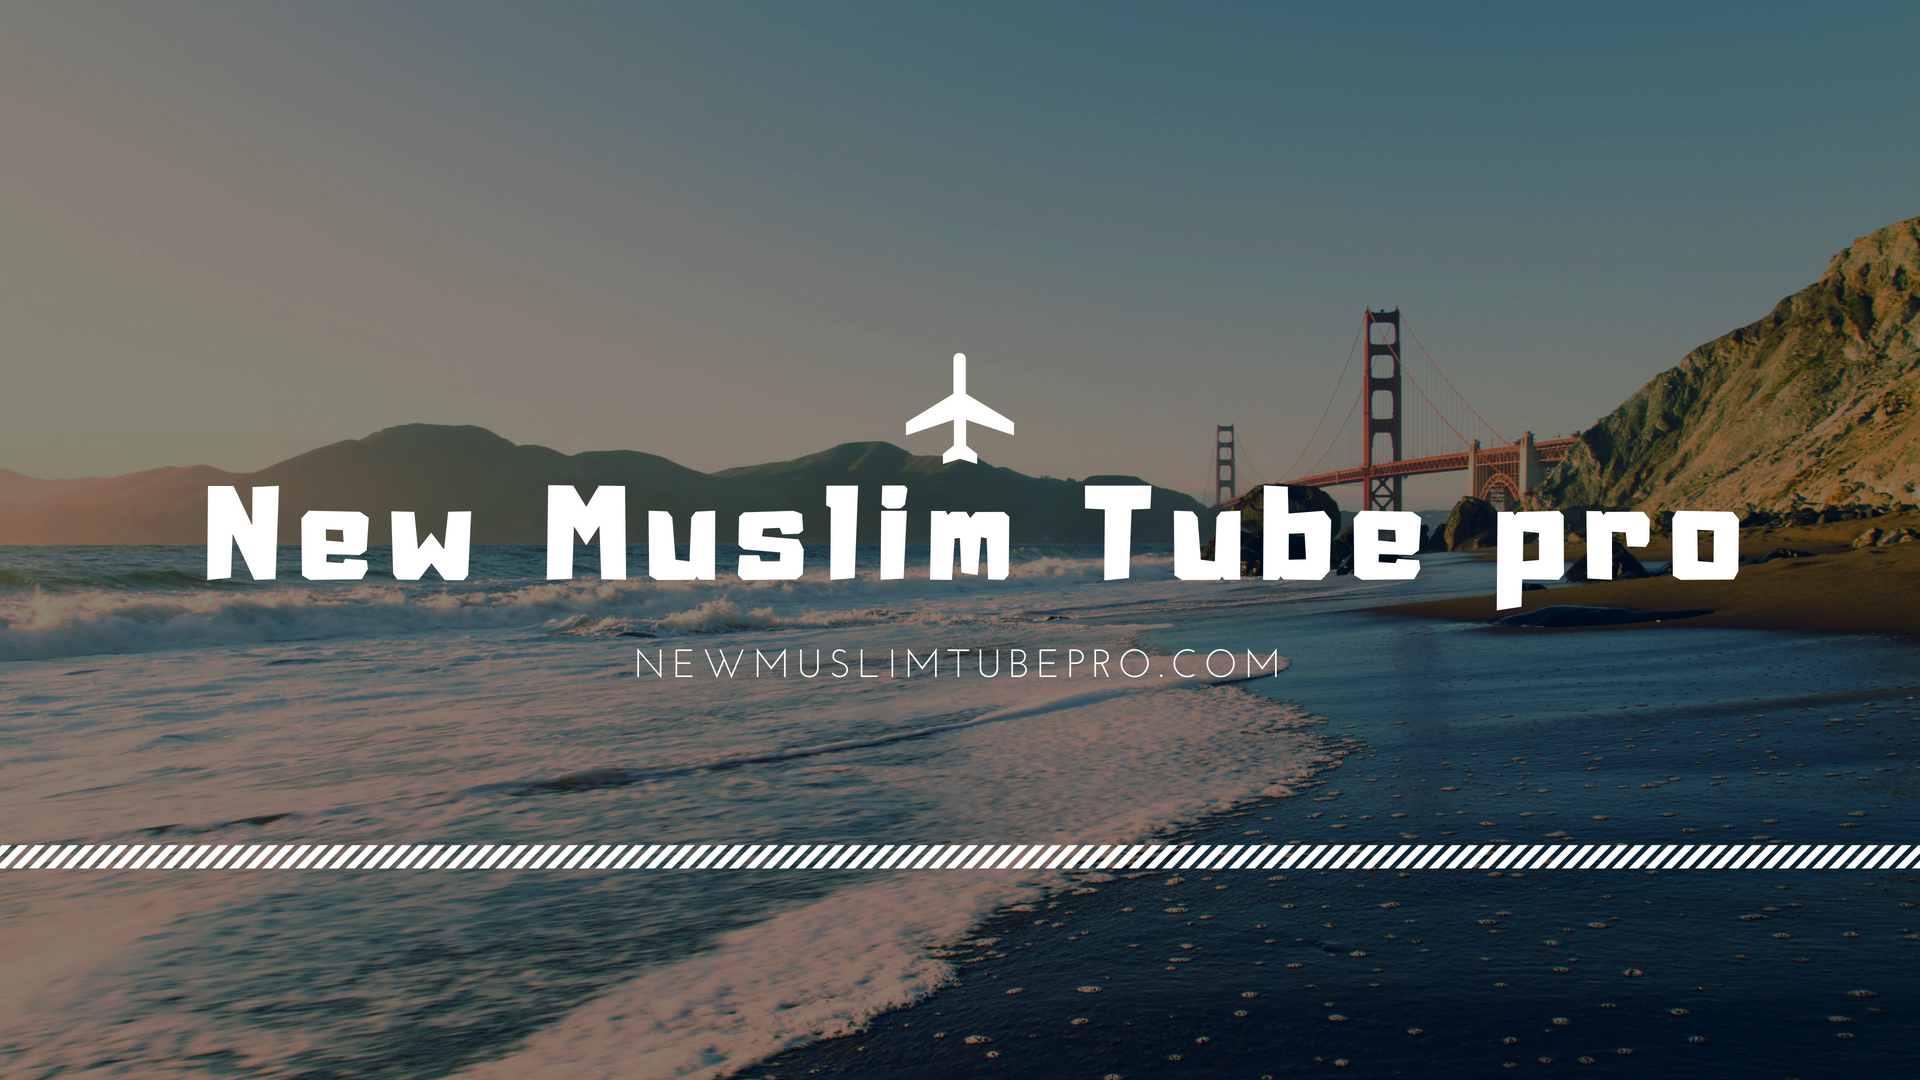 New Muslim Tube pro trip travel website